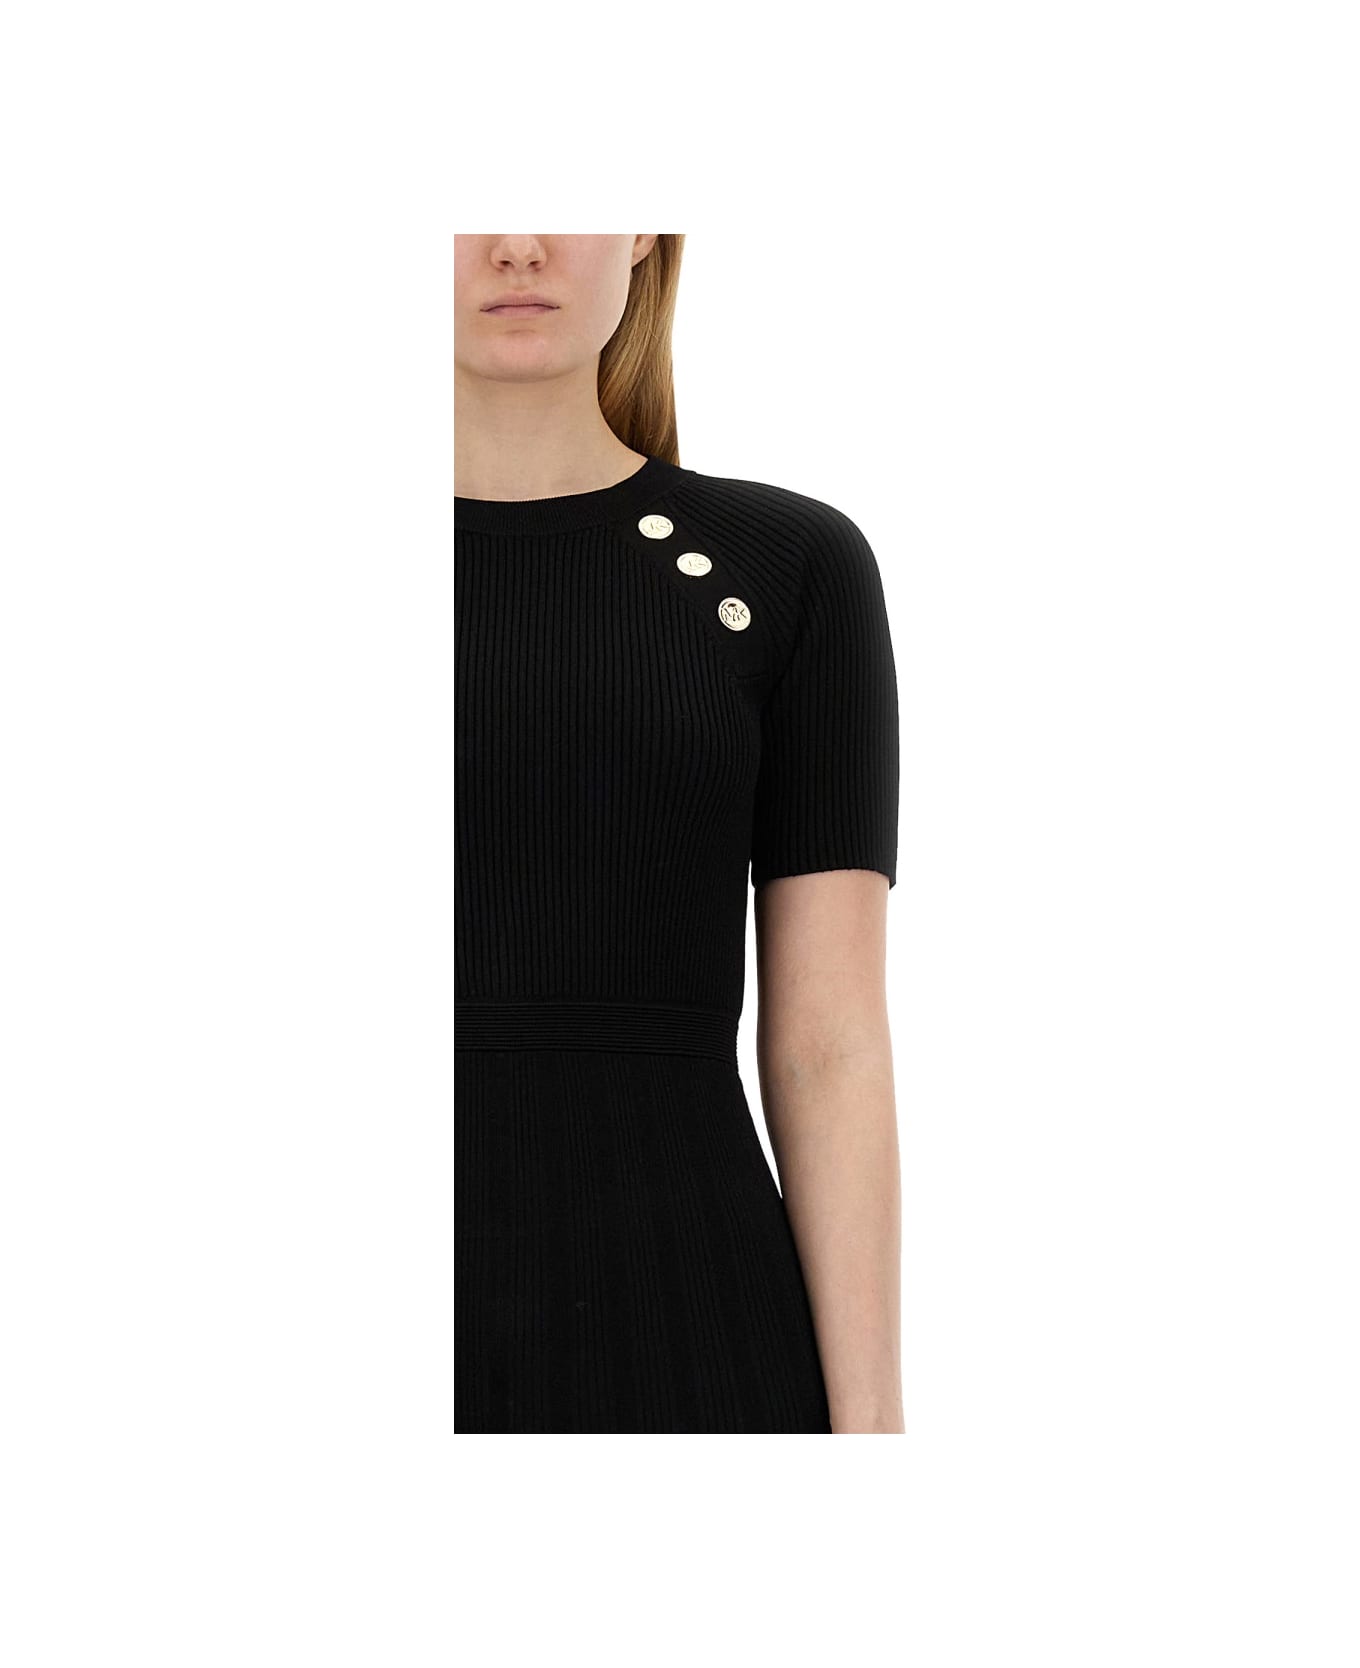 Michael Kors Stretch Knit Longuette Dress - BLACK